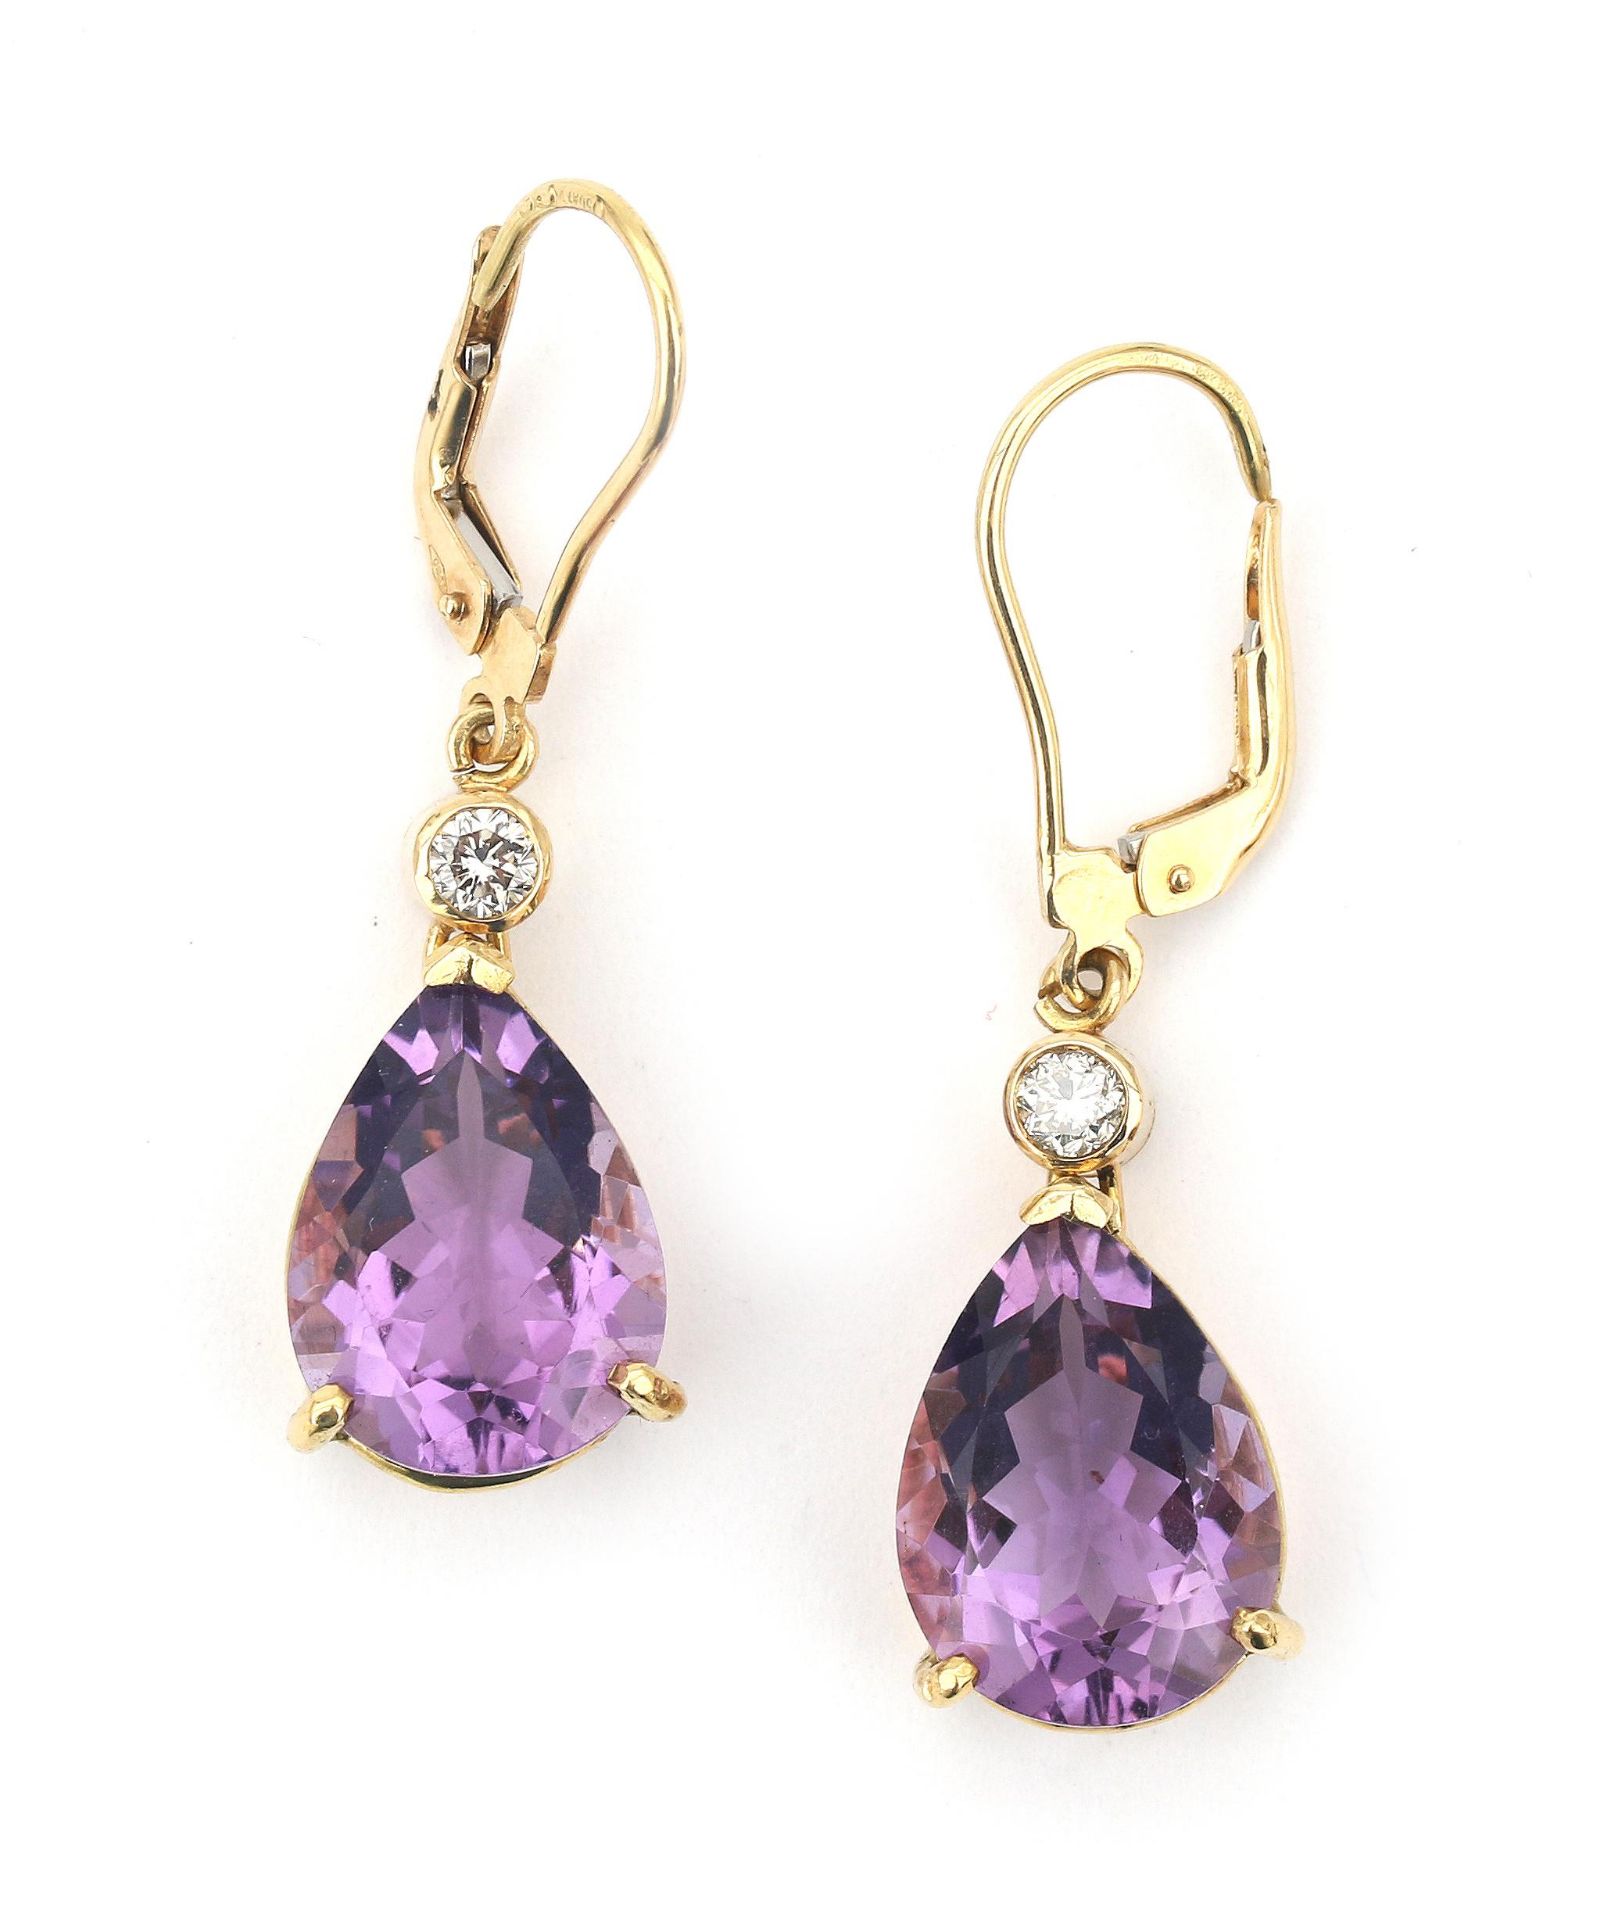 A pair of 18 karat gold diamond and amethyst earrings